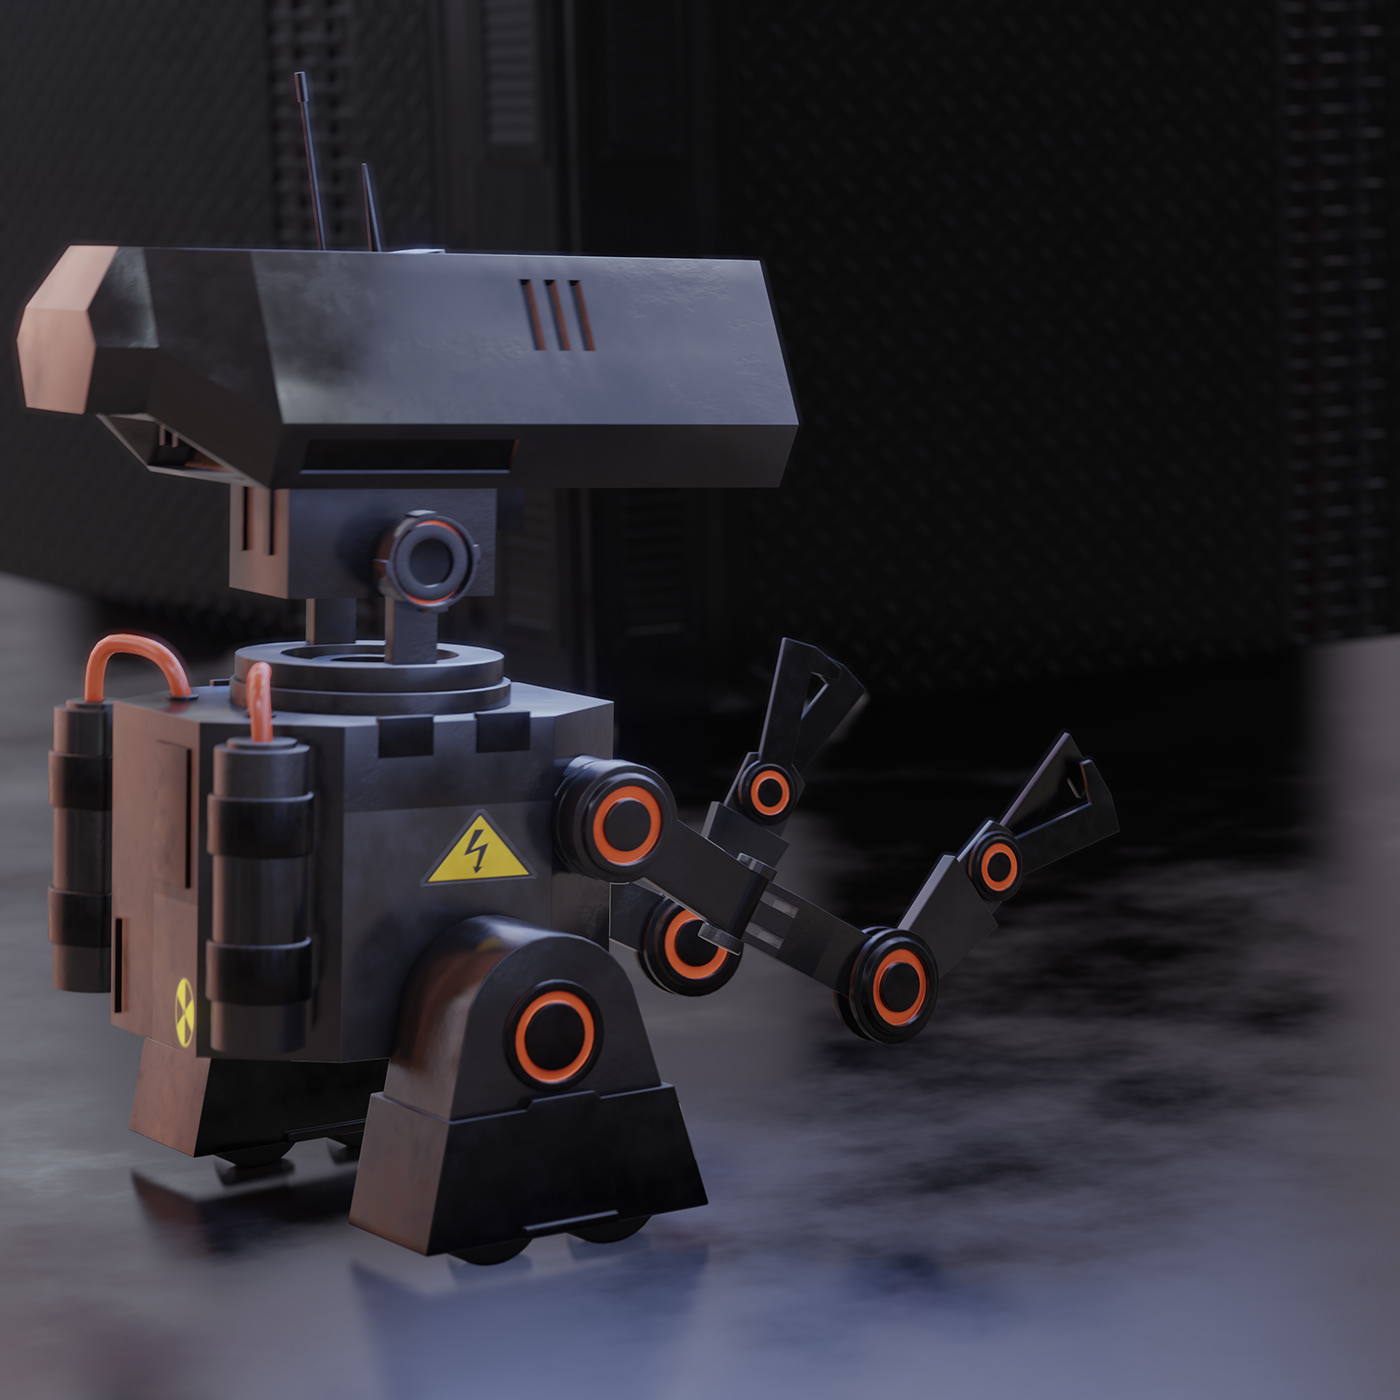 blender3d industrial mechanical Render robot sci-fi science fiction